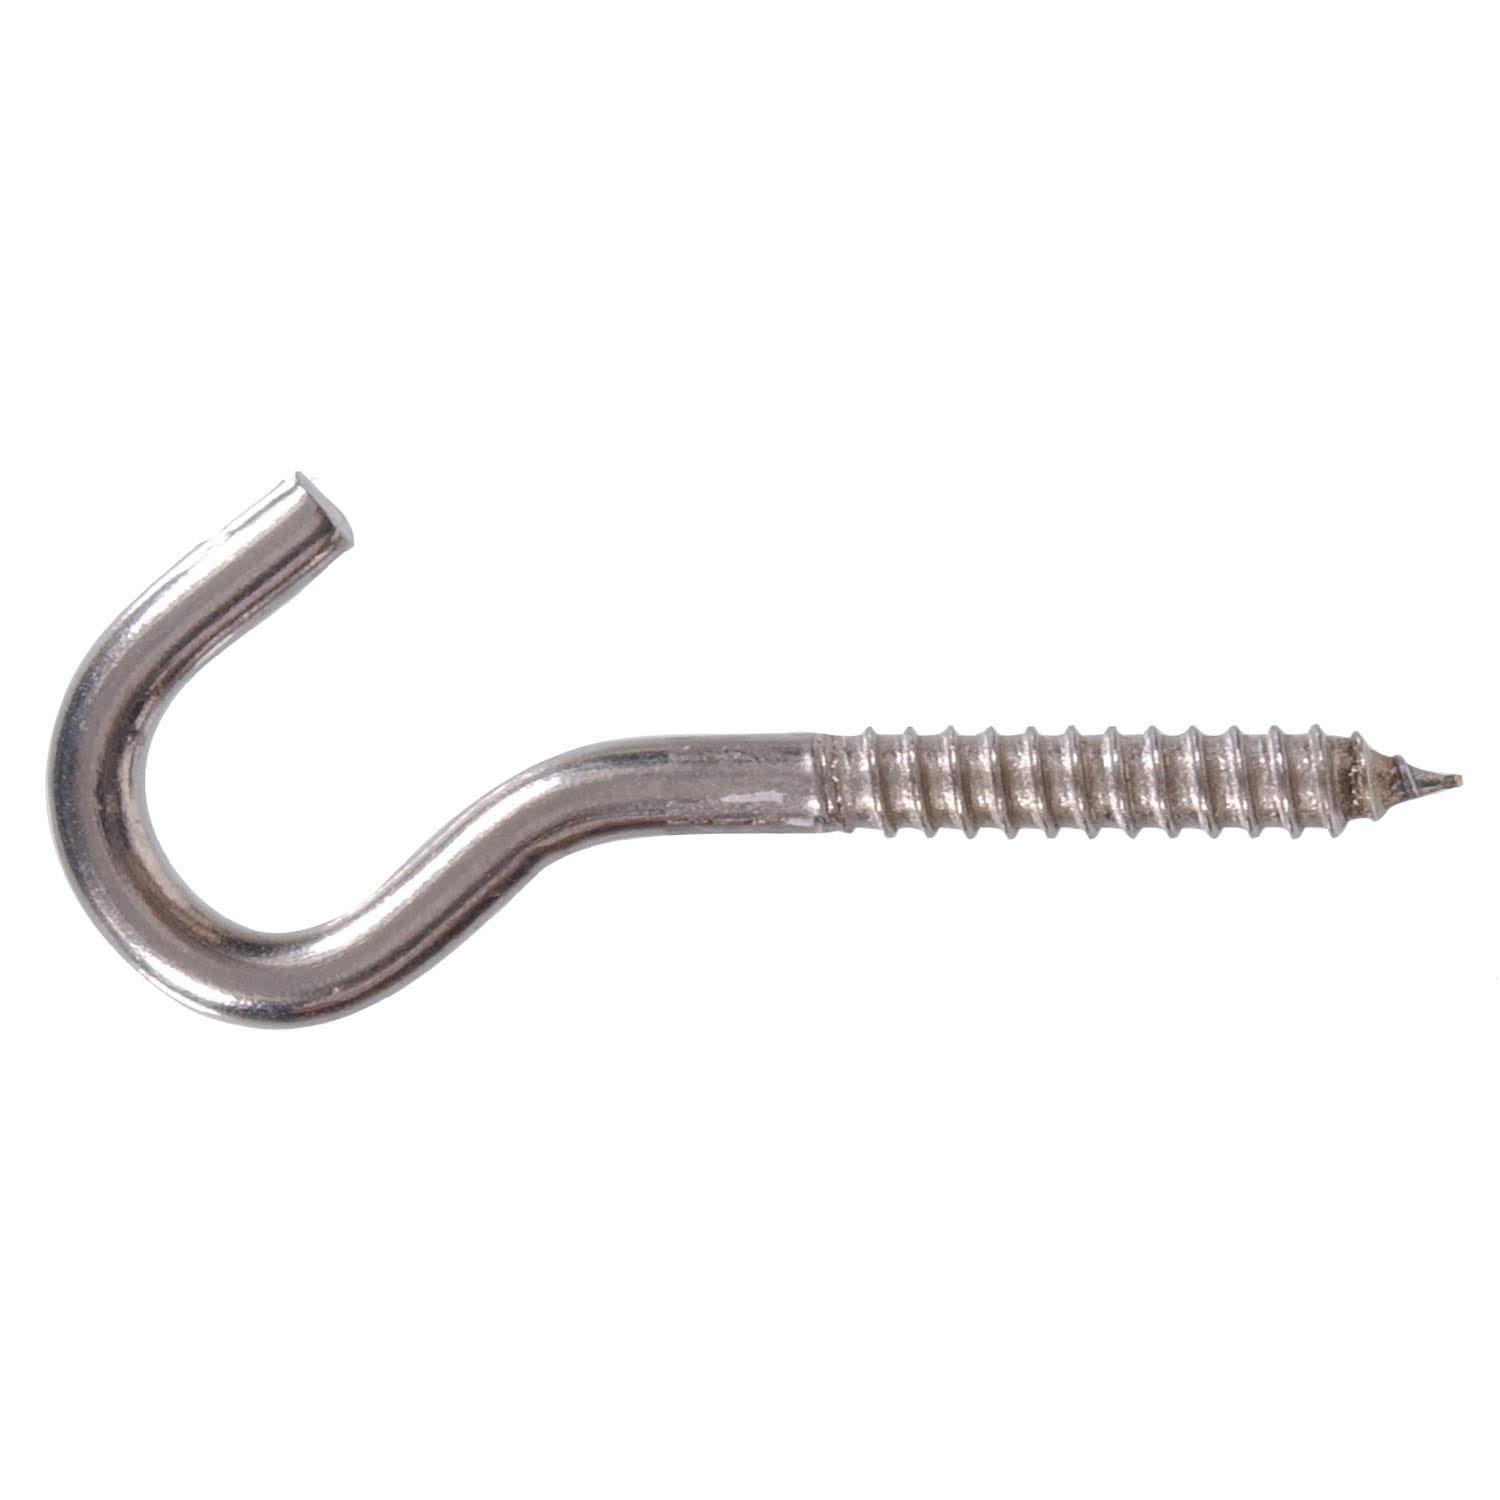 Hardware Essentials 851879 Stainless Steel Screw Hook (1/4'' x 4-1/4'') 10 Pack, Silver